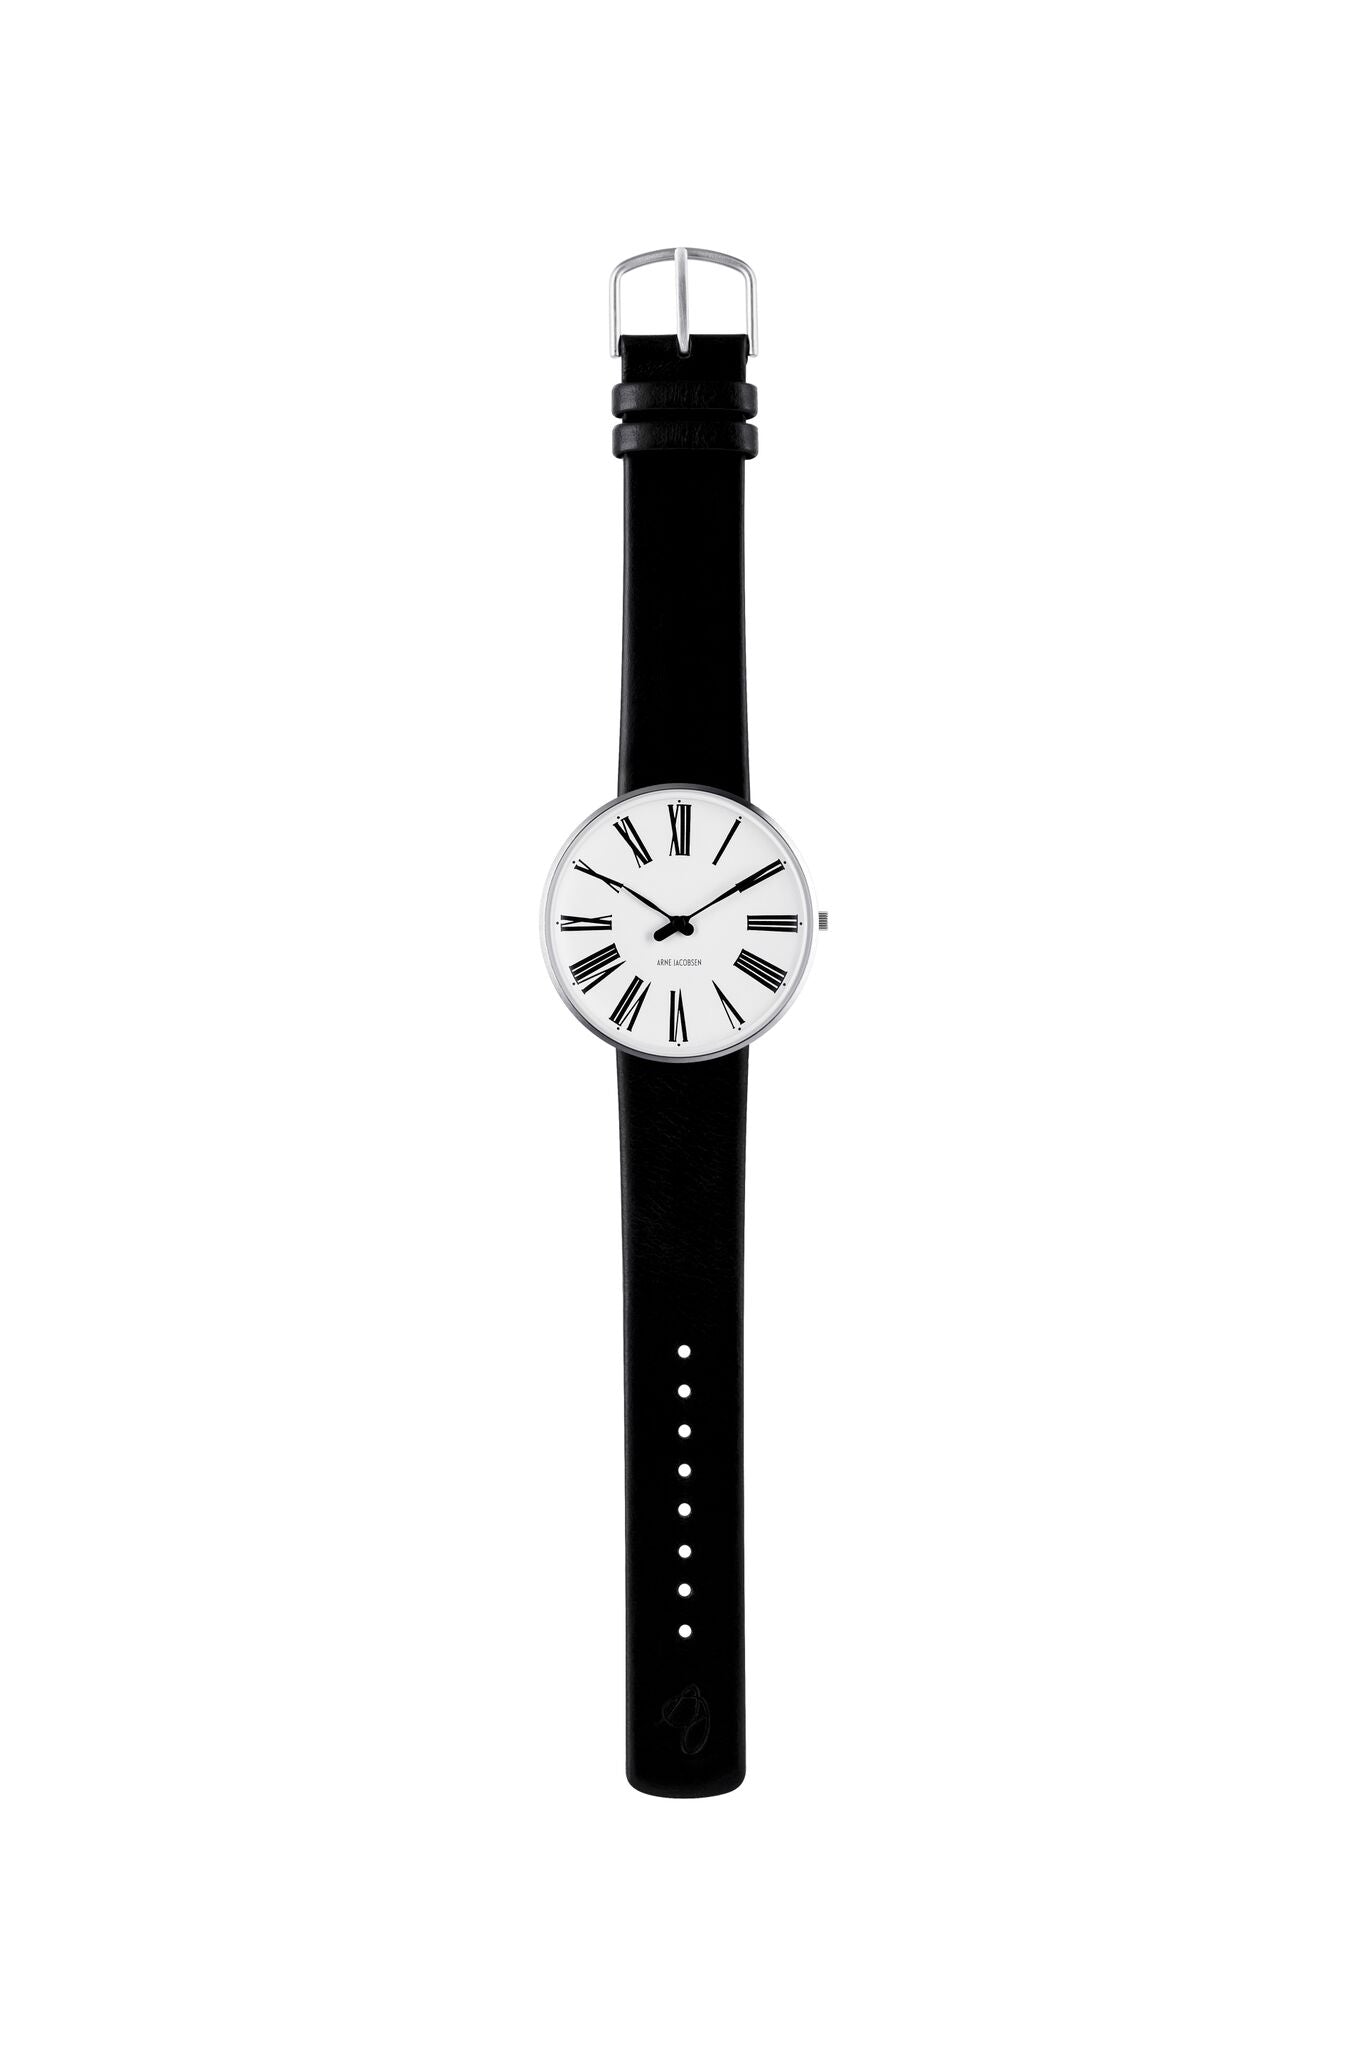 Arne Jacobsen 40mm Wrist Watch Roman